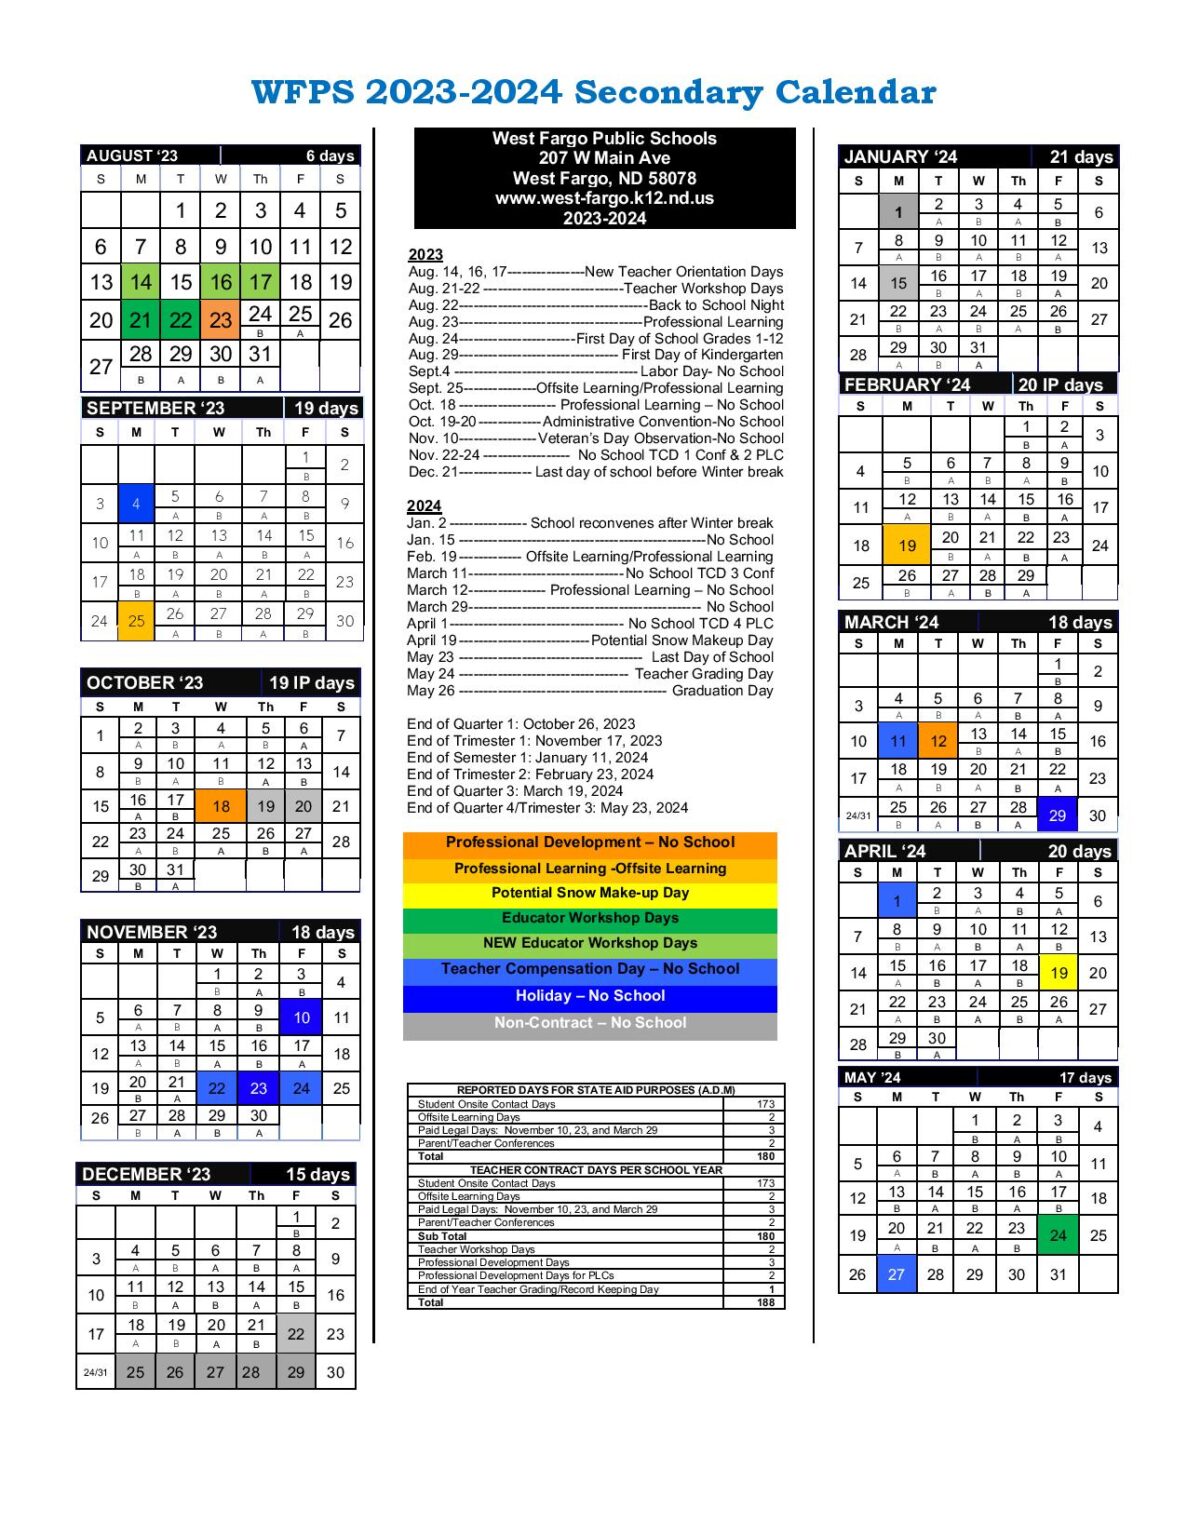 West Fargo Public Schools Calendar 20232024 in PDF